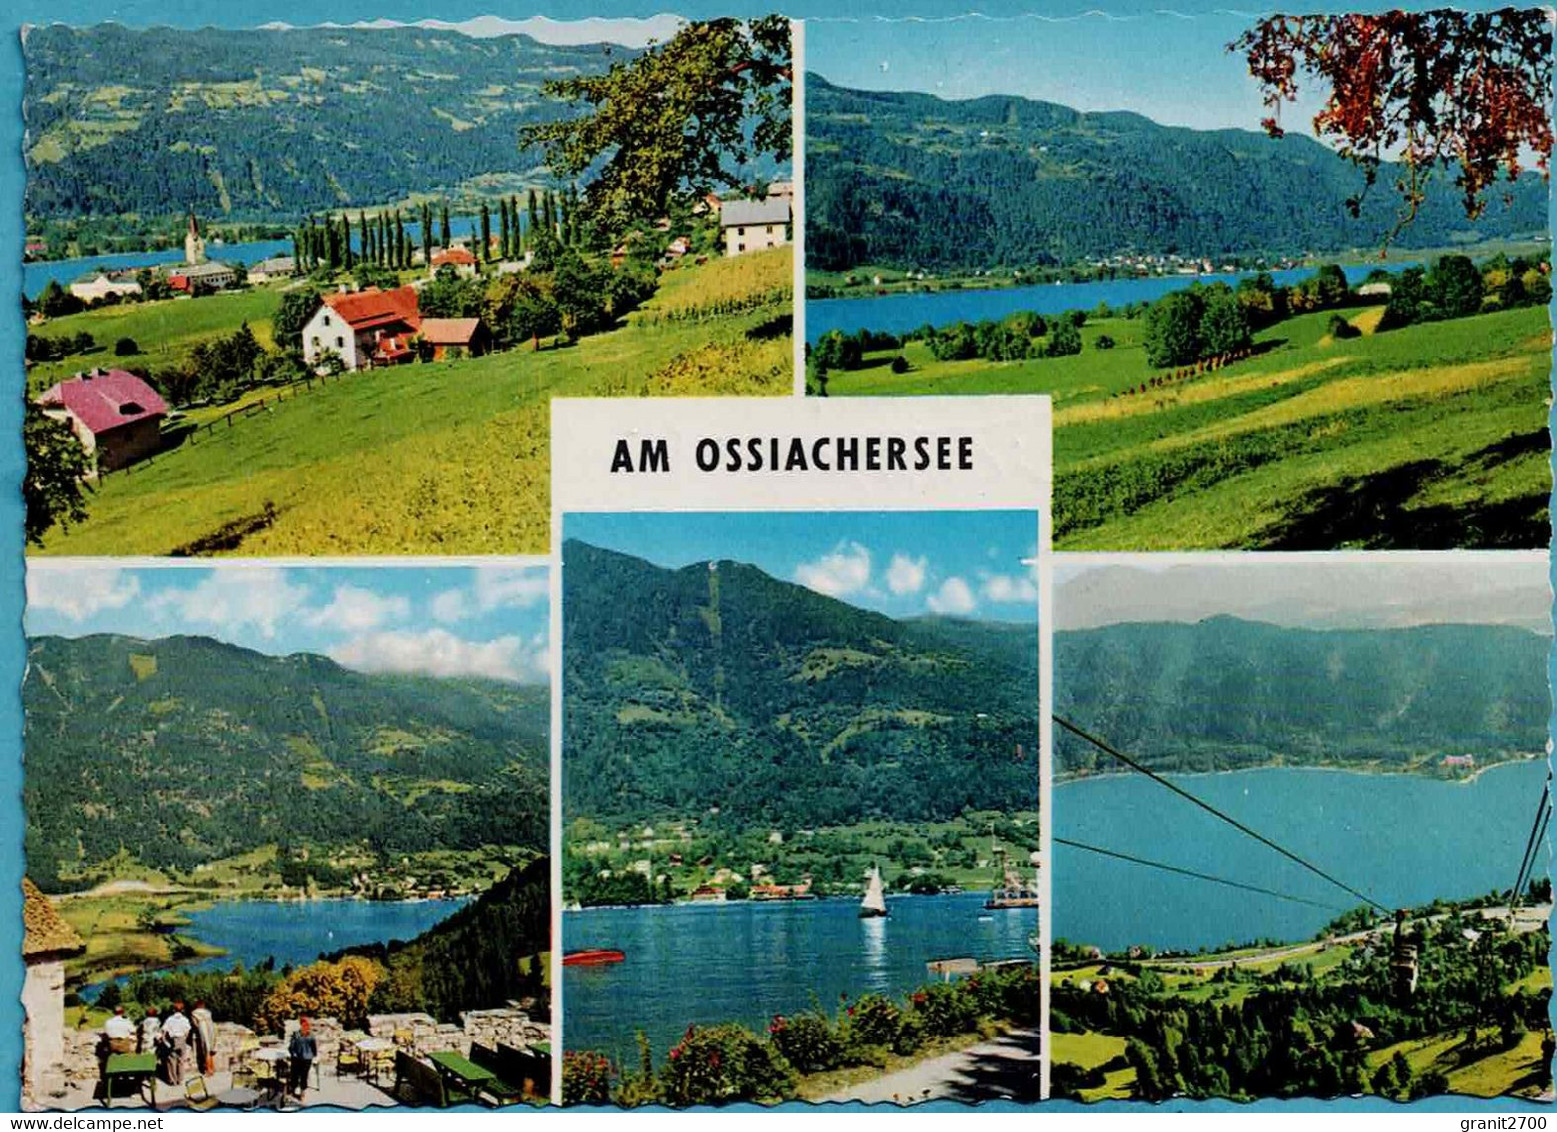 AM OSSIACHERSEE. 1963 - Ossiachersee-Orte